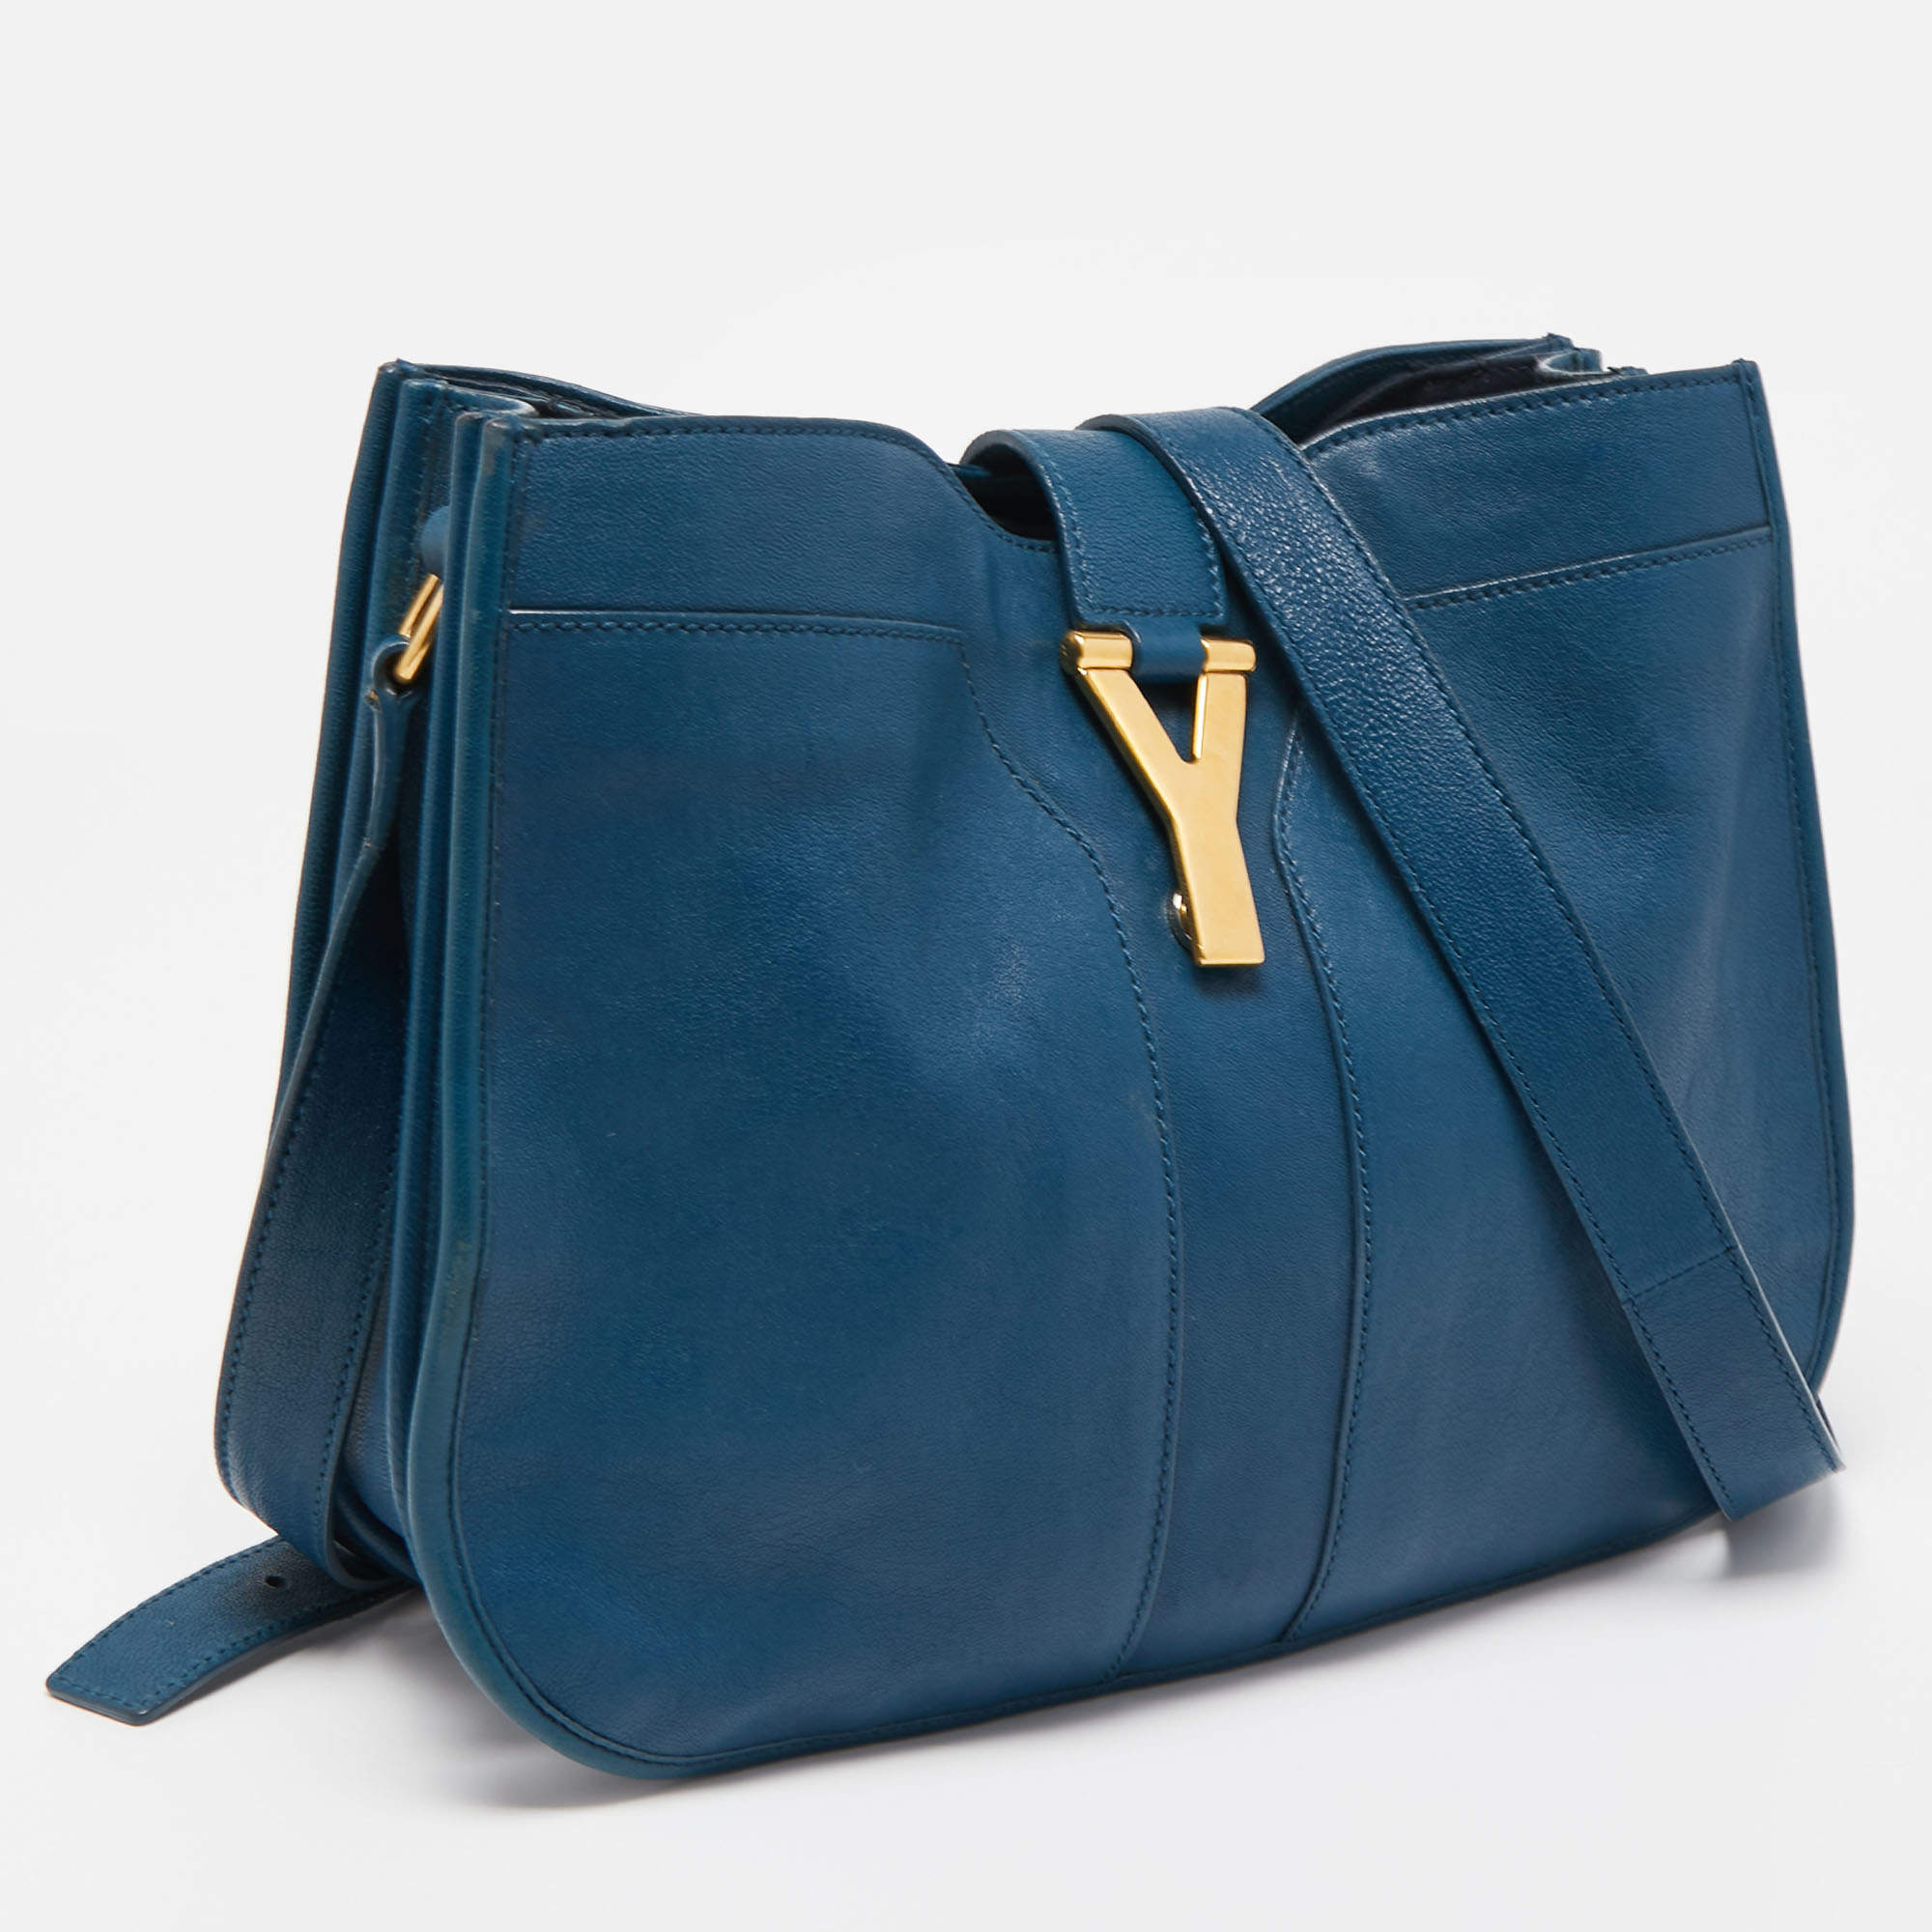 Yves Saint Laurent Teal Blue Leather Medium Cabas Chyc Shoulder